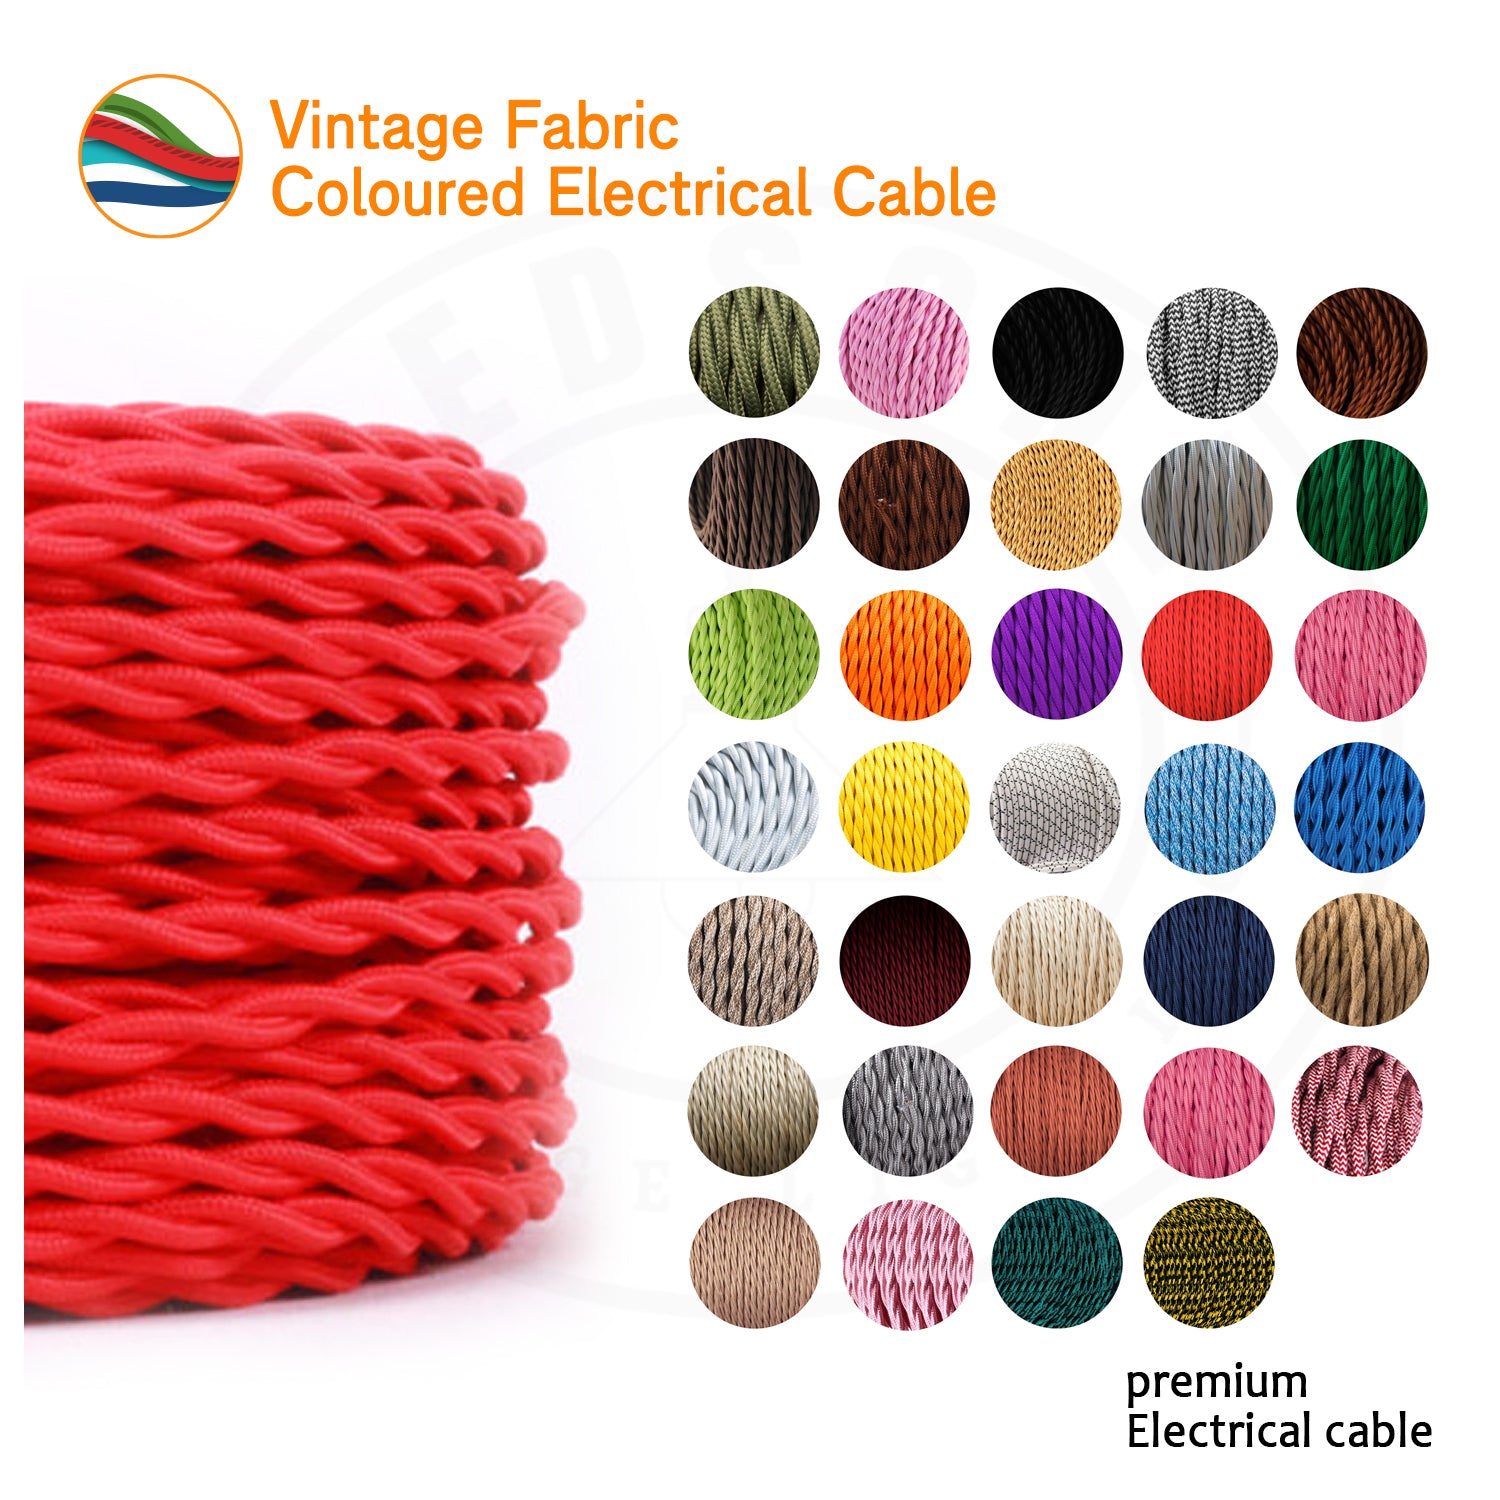 Vintage Cable